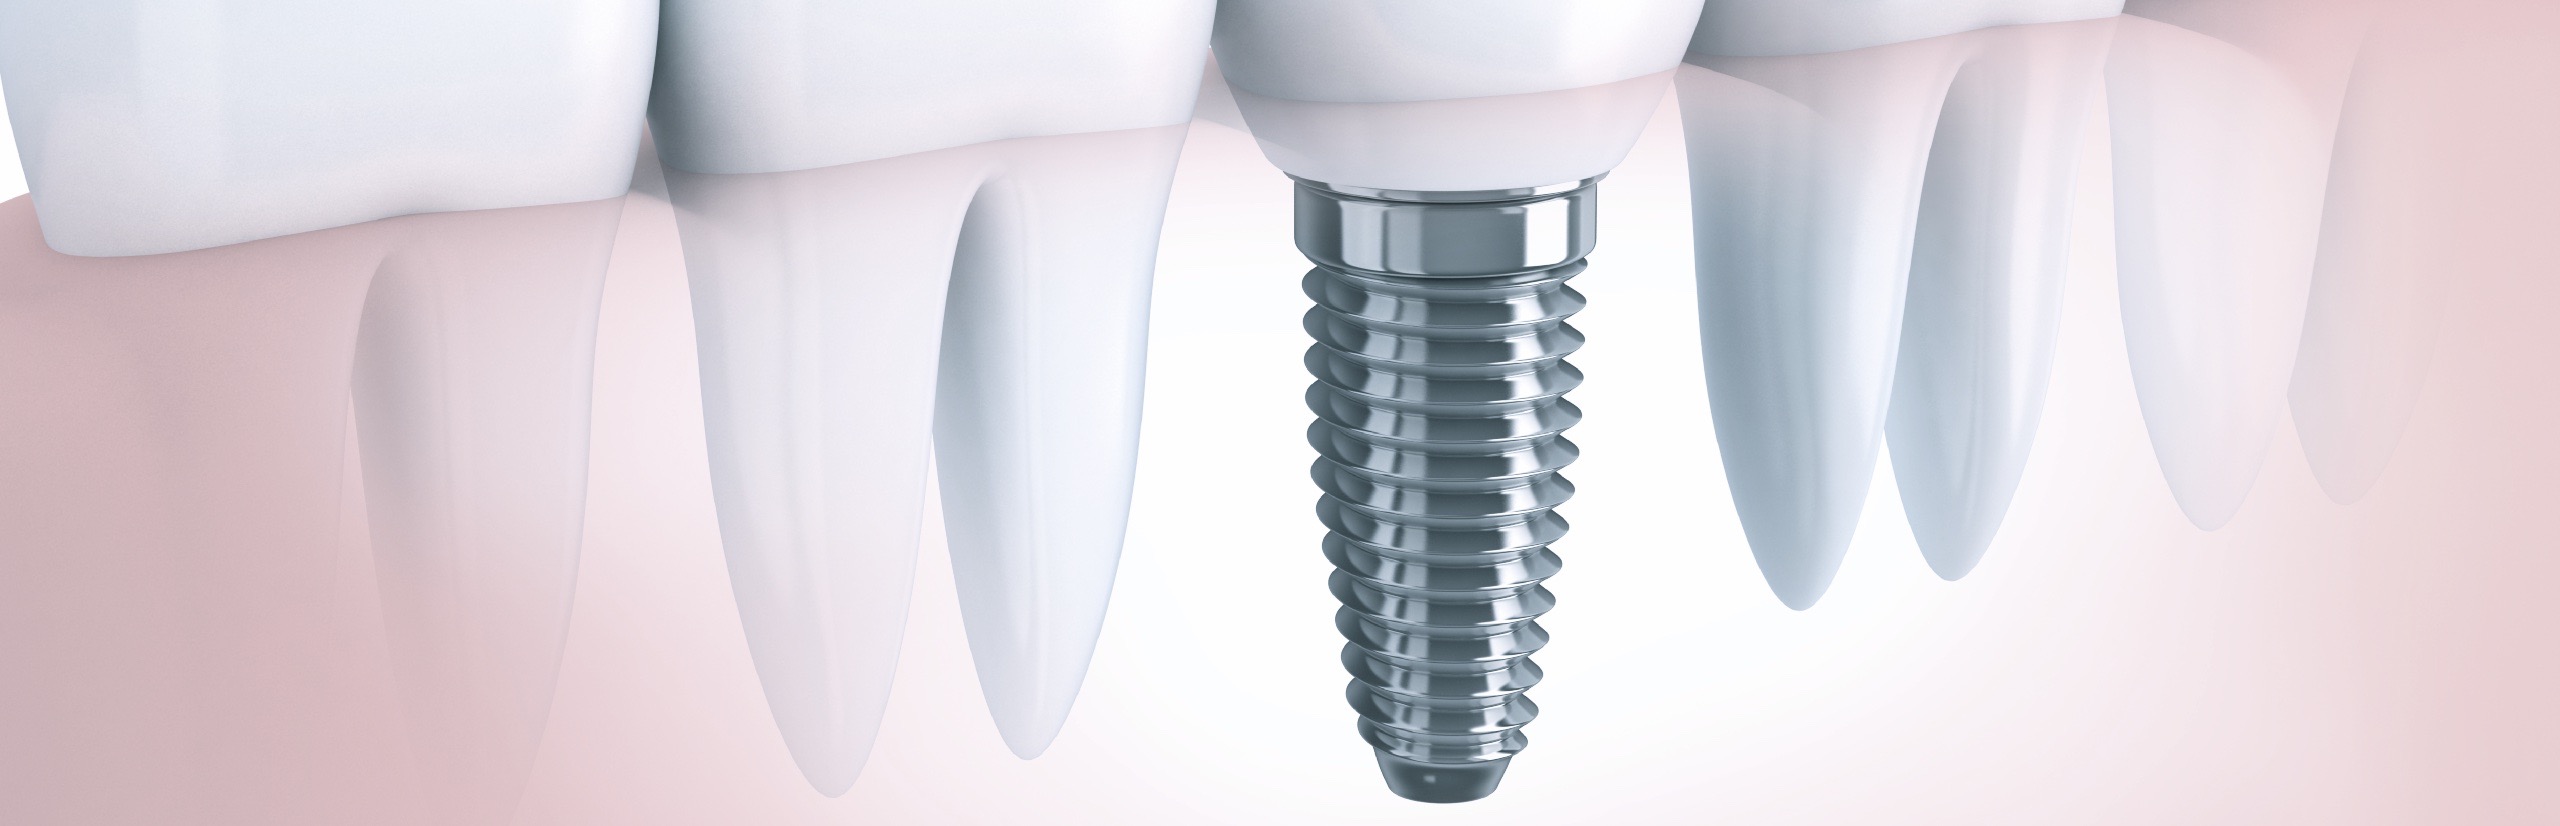 Dental-implants-complications1.jpg